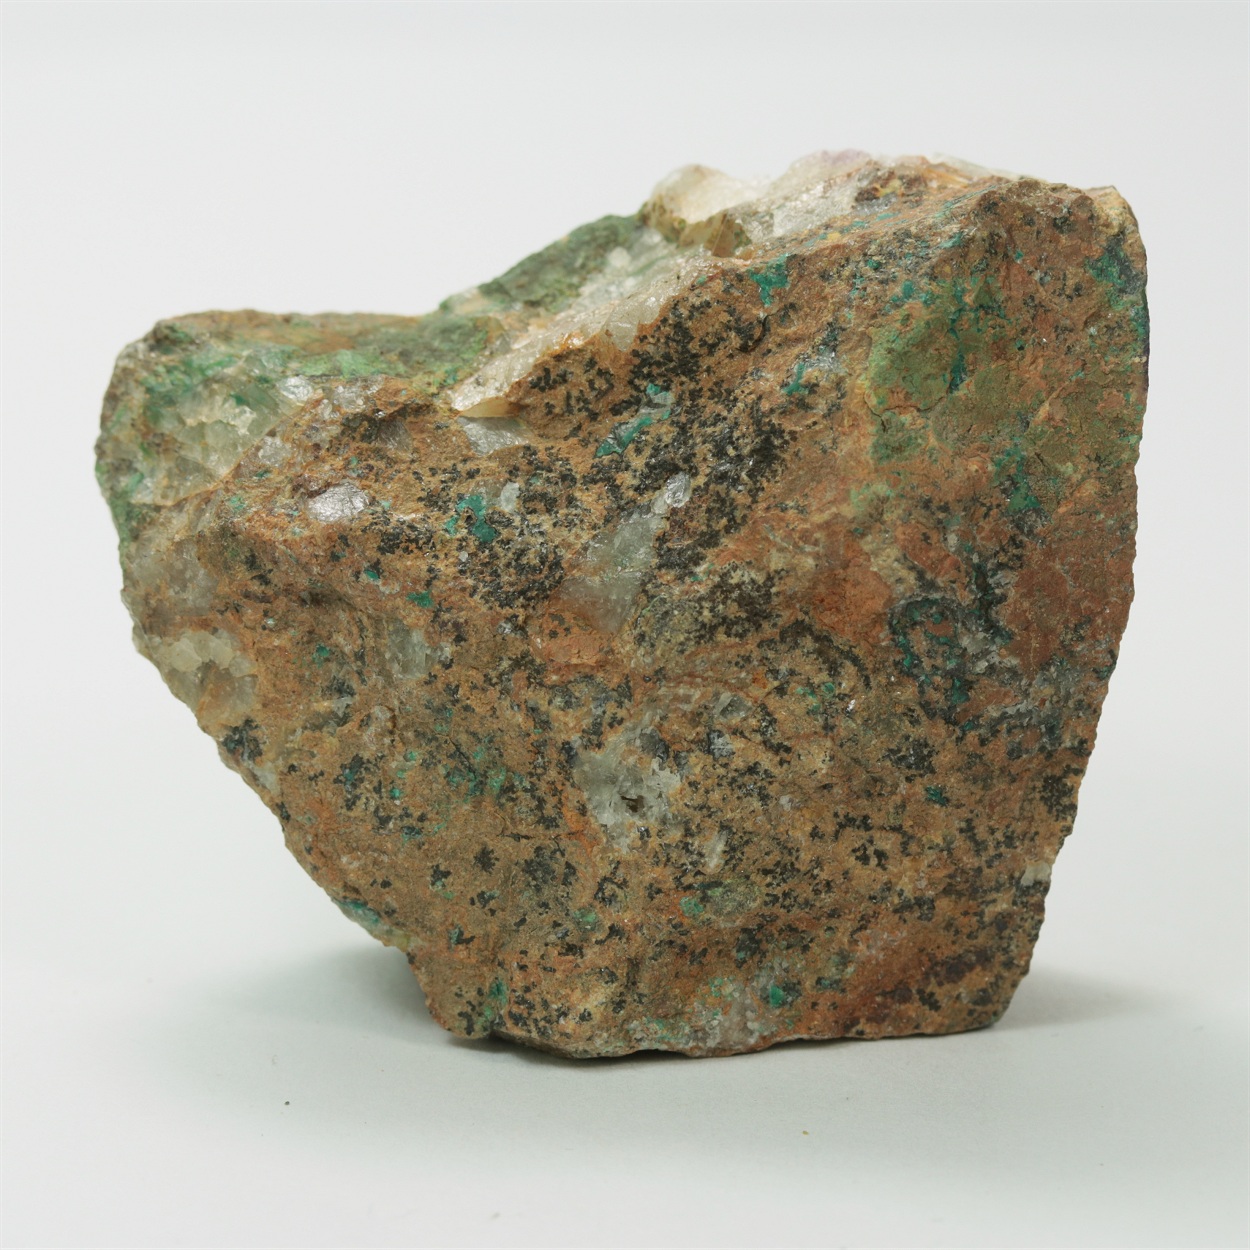 Chlorargyrite